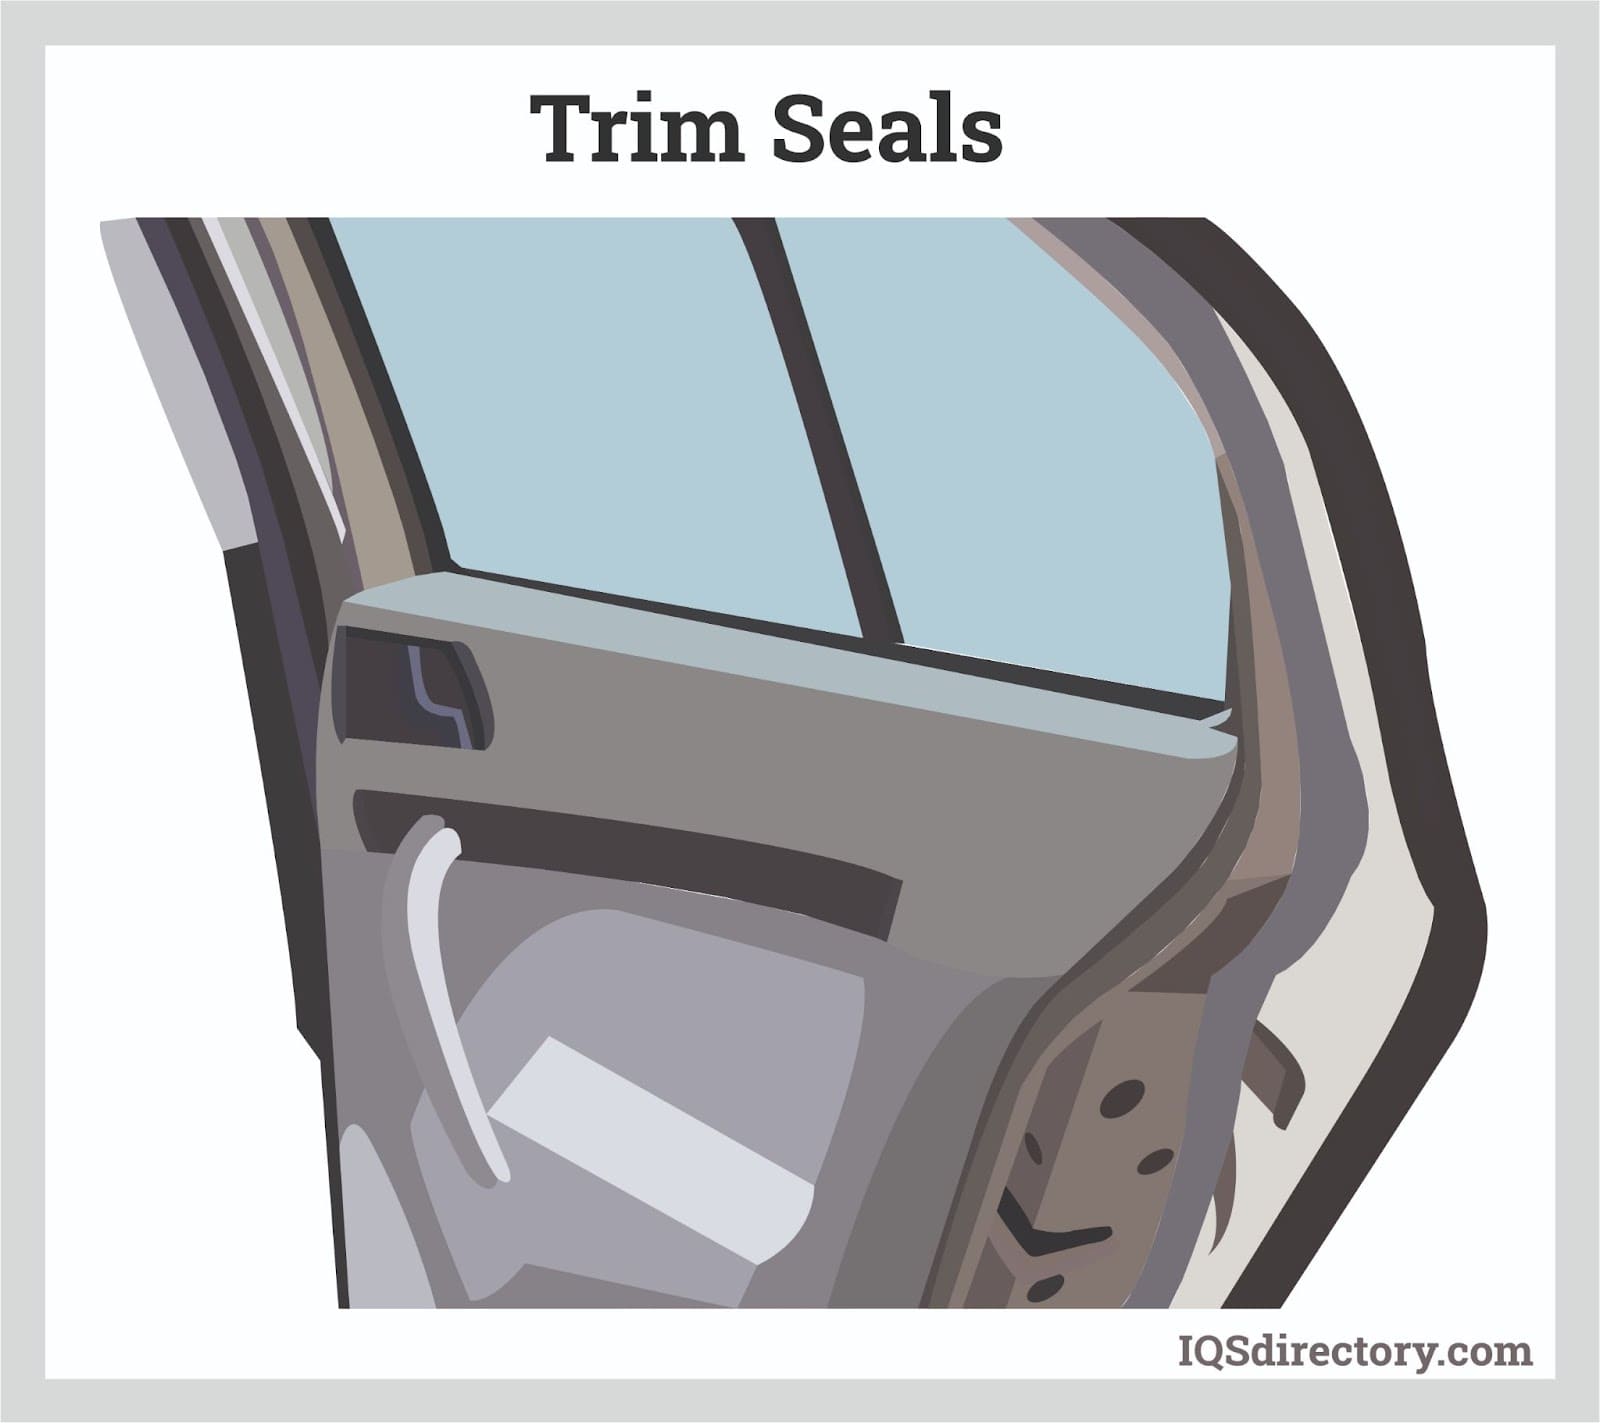 Trim Seals